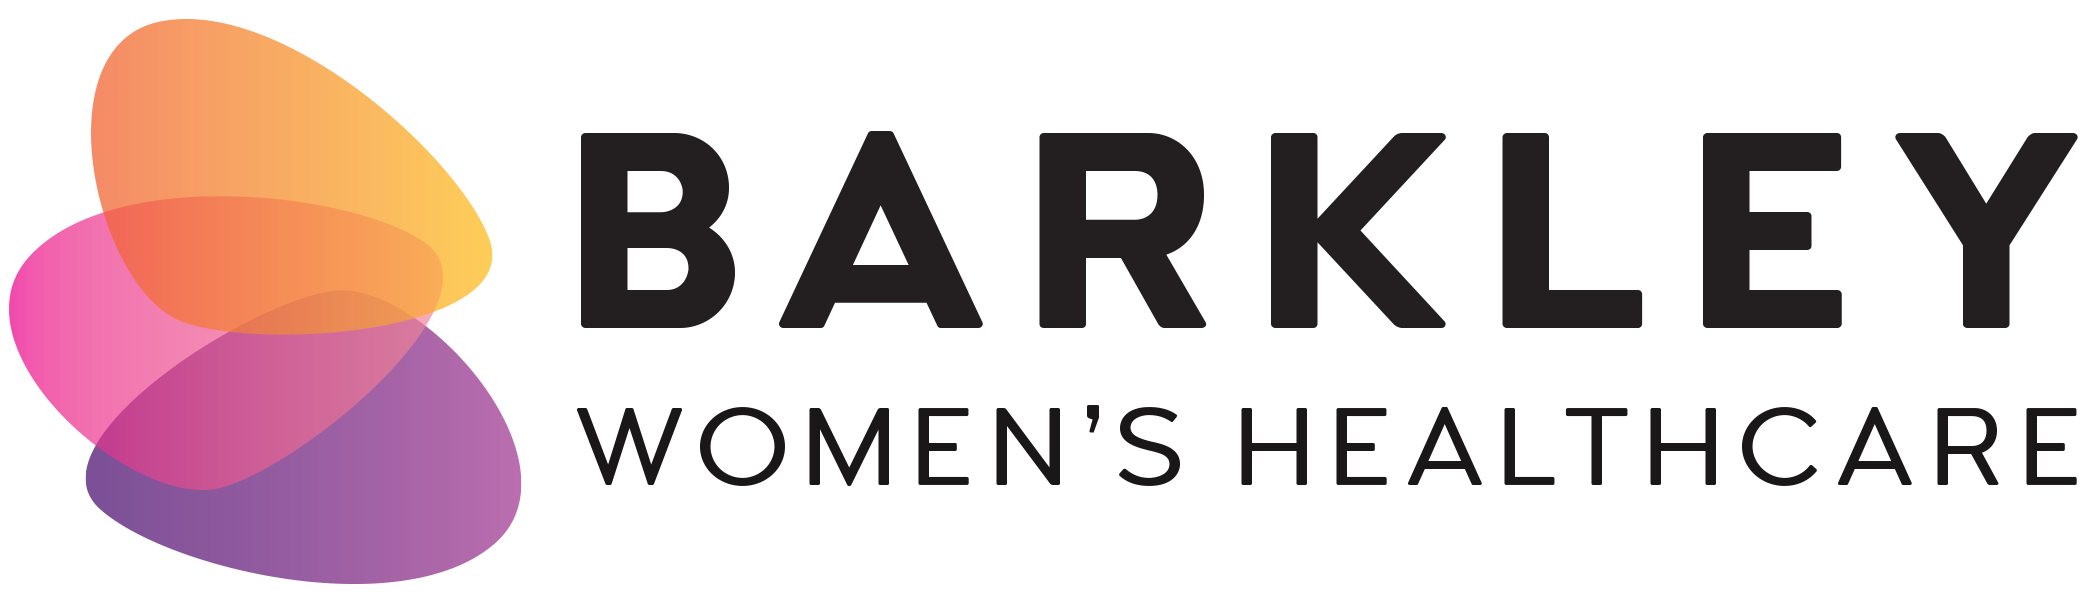 Barkley Women's Healthcare logo